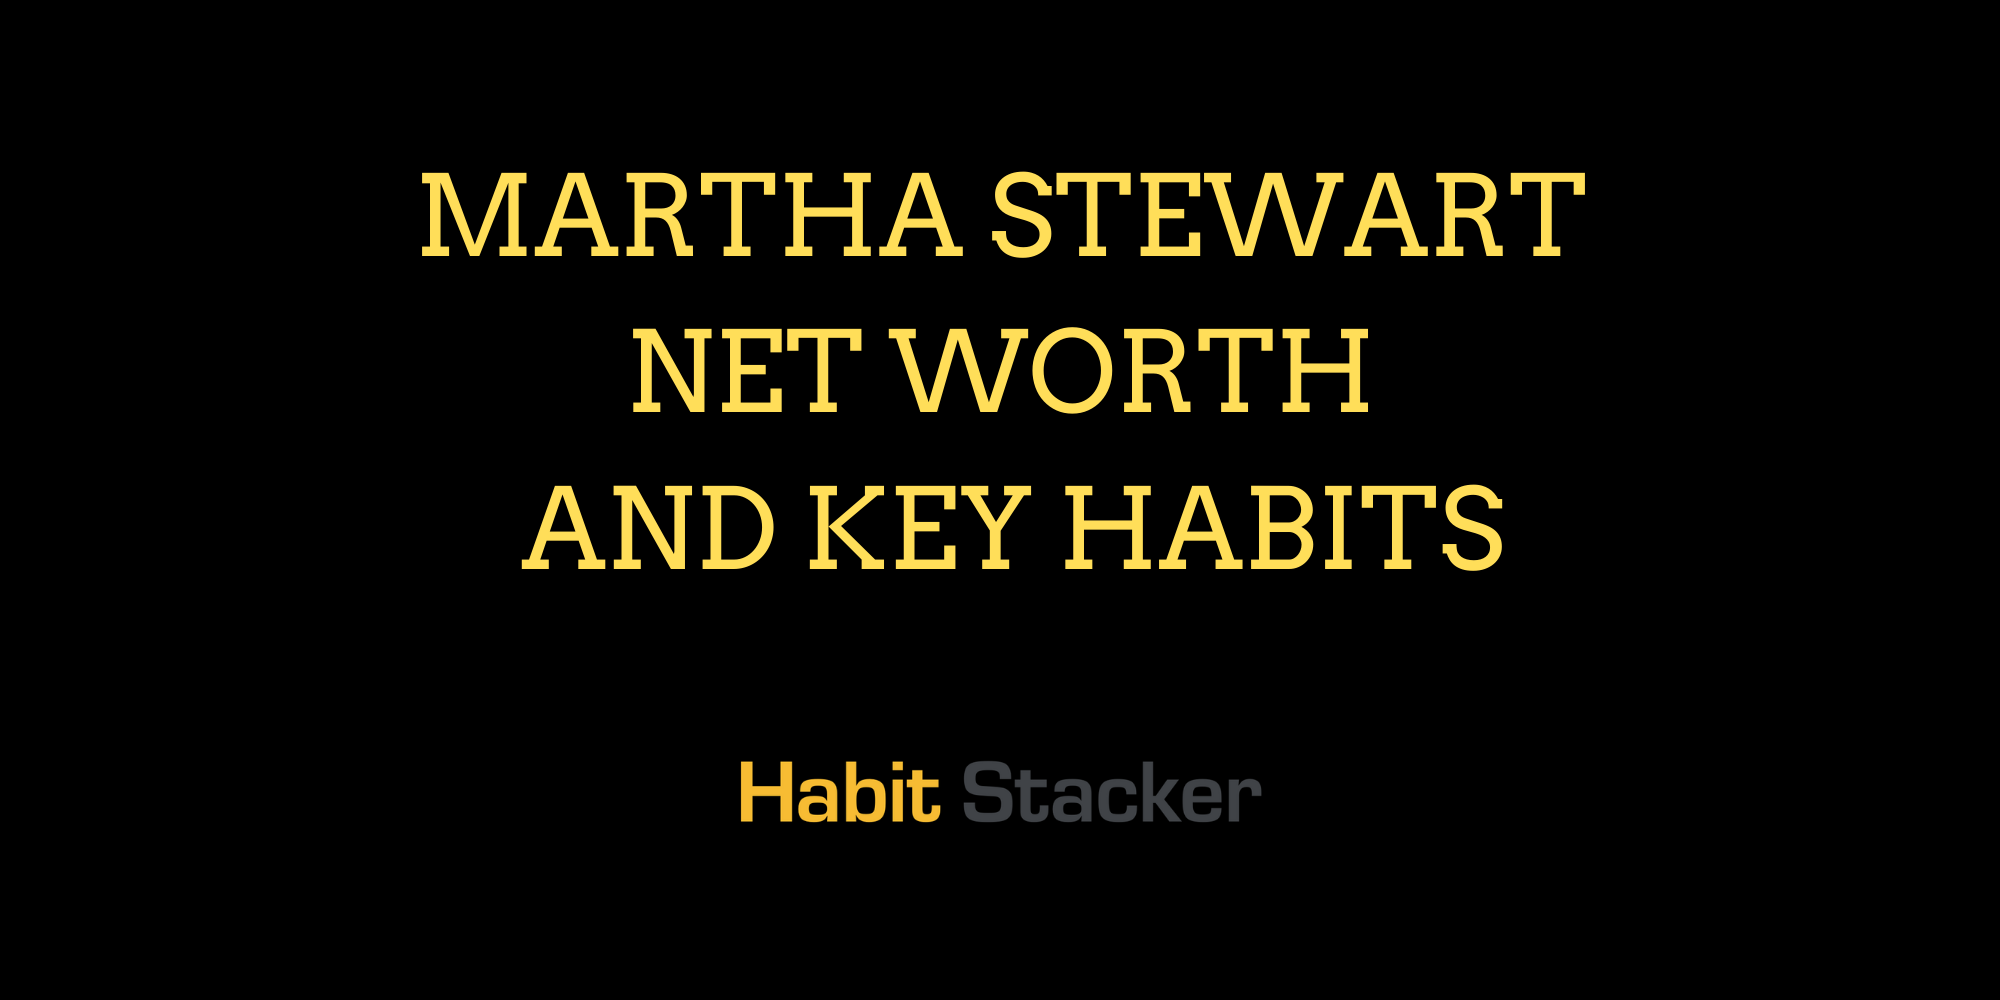 Martha Stewart Net Worth and Key Habits